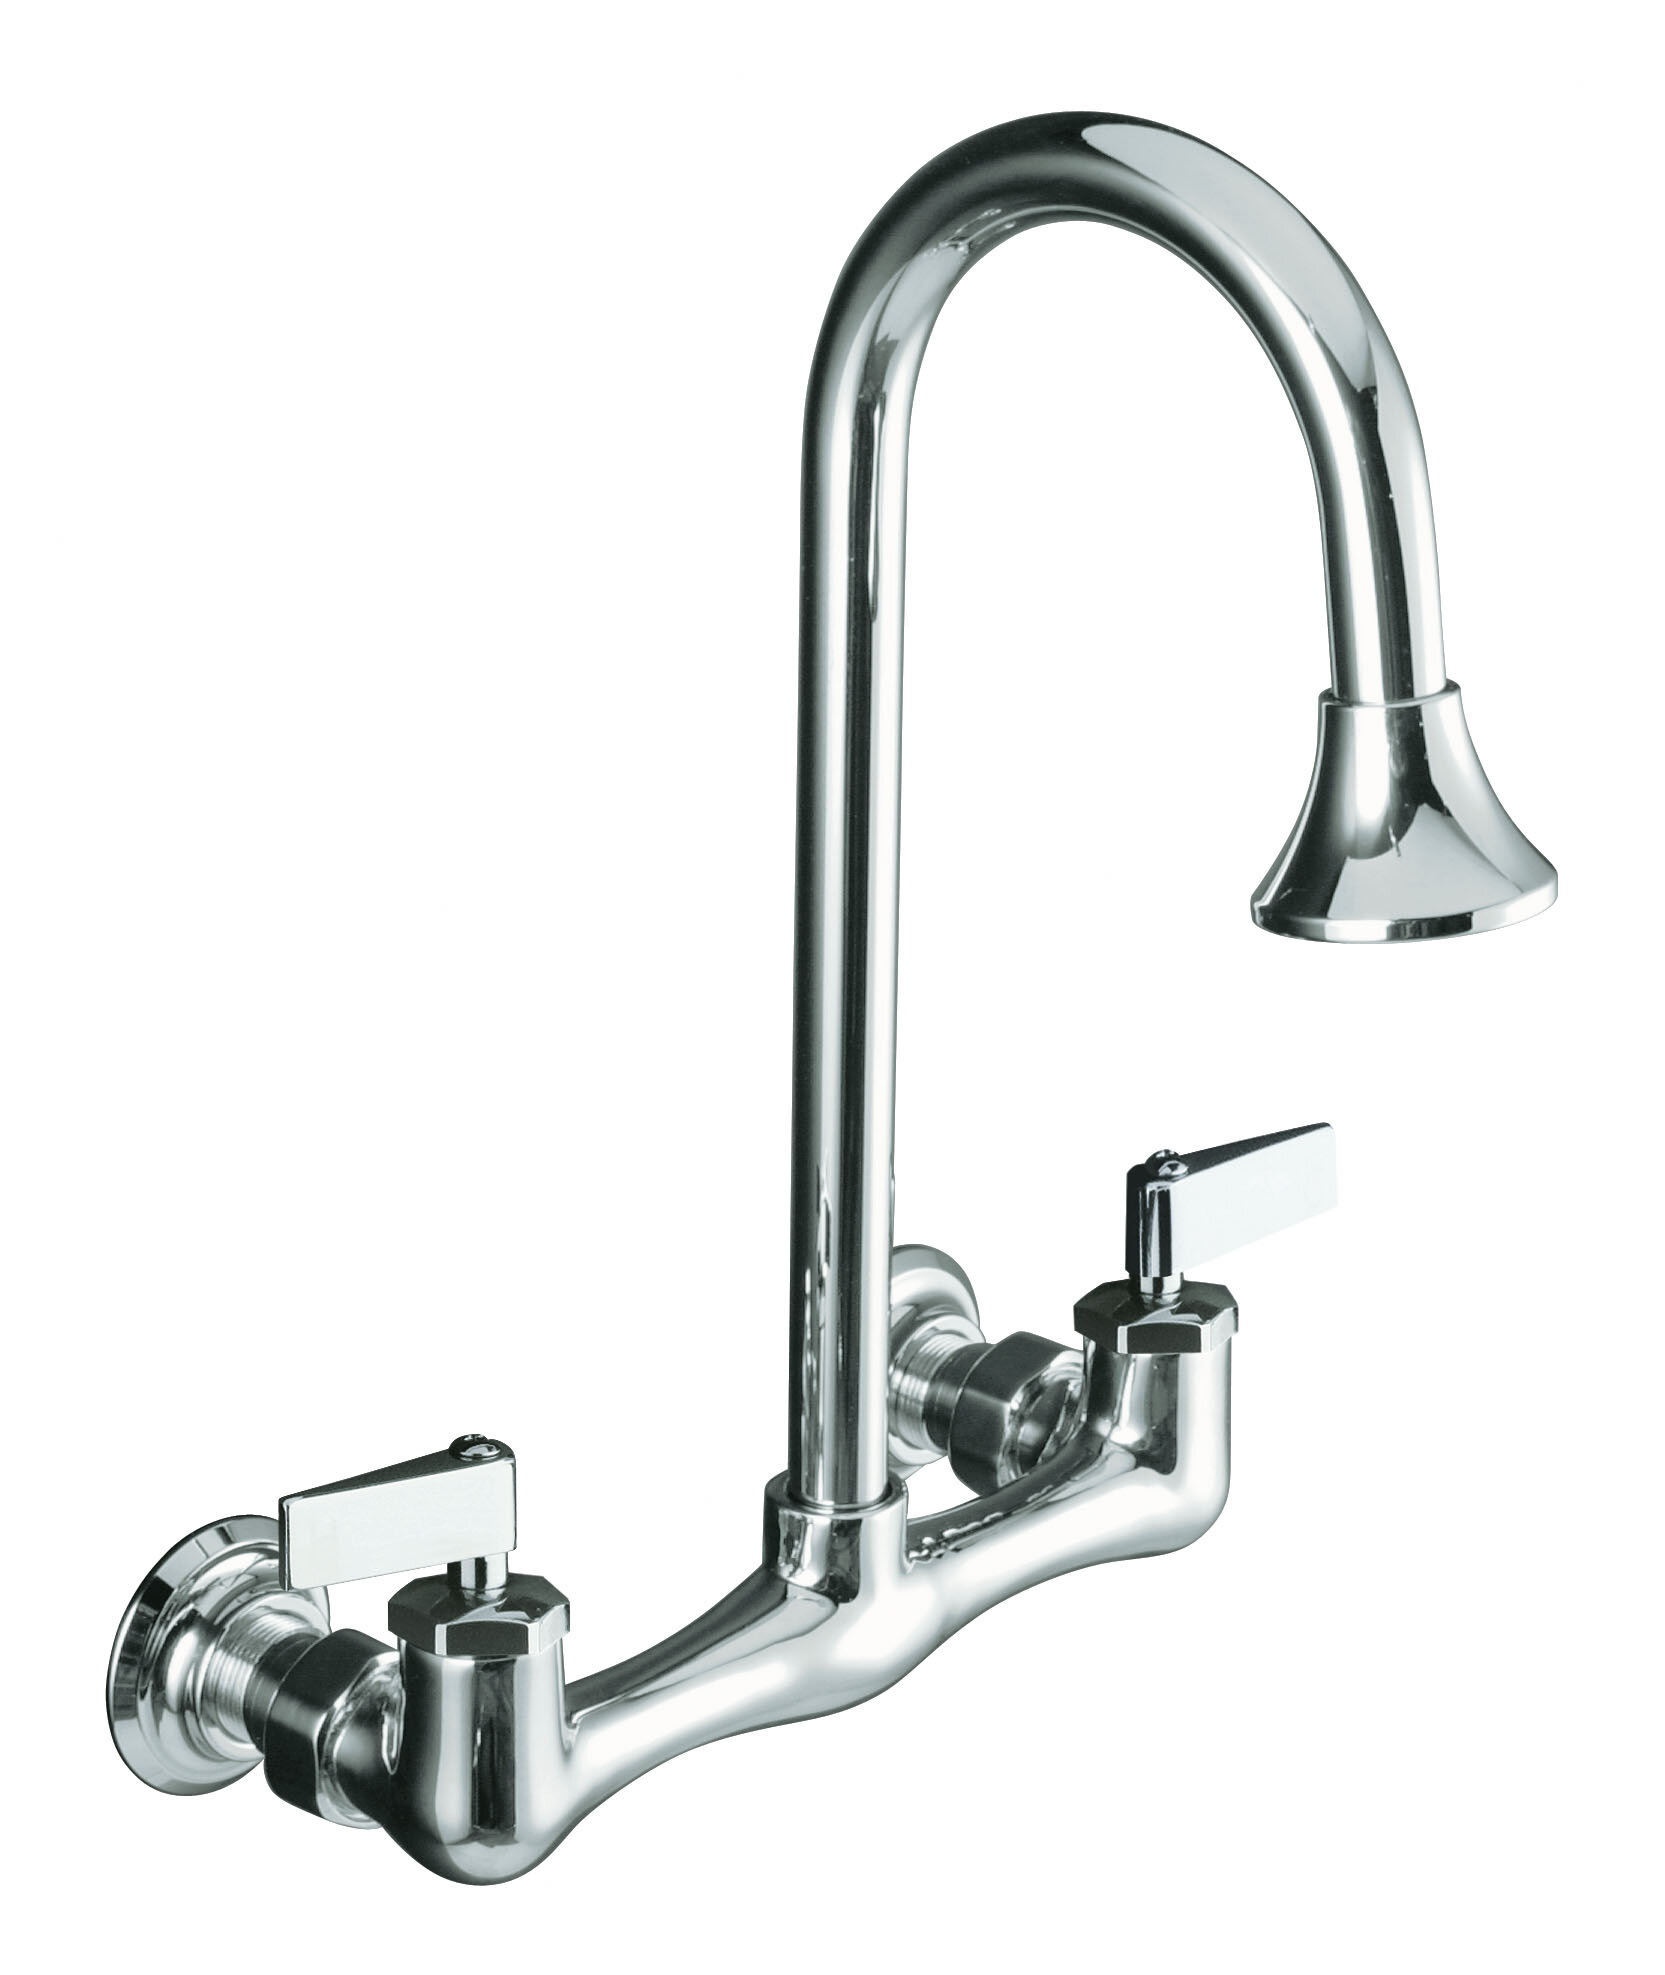 Kohler Triton Double Lever Handle Utility Sink Faucet With